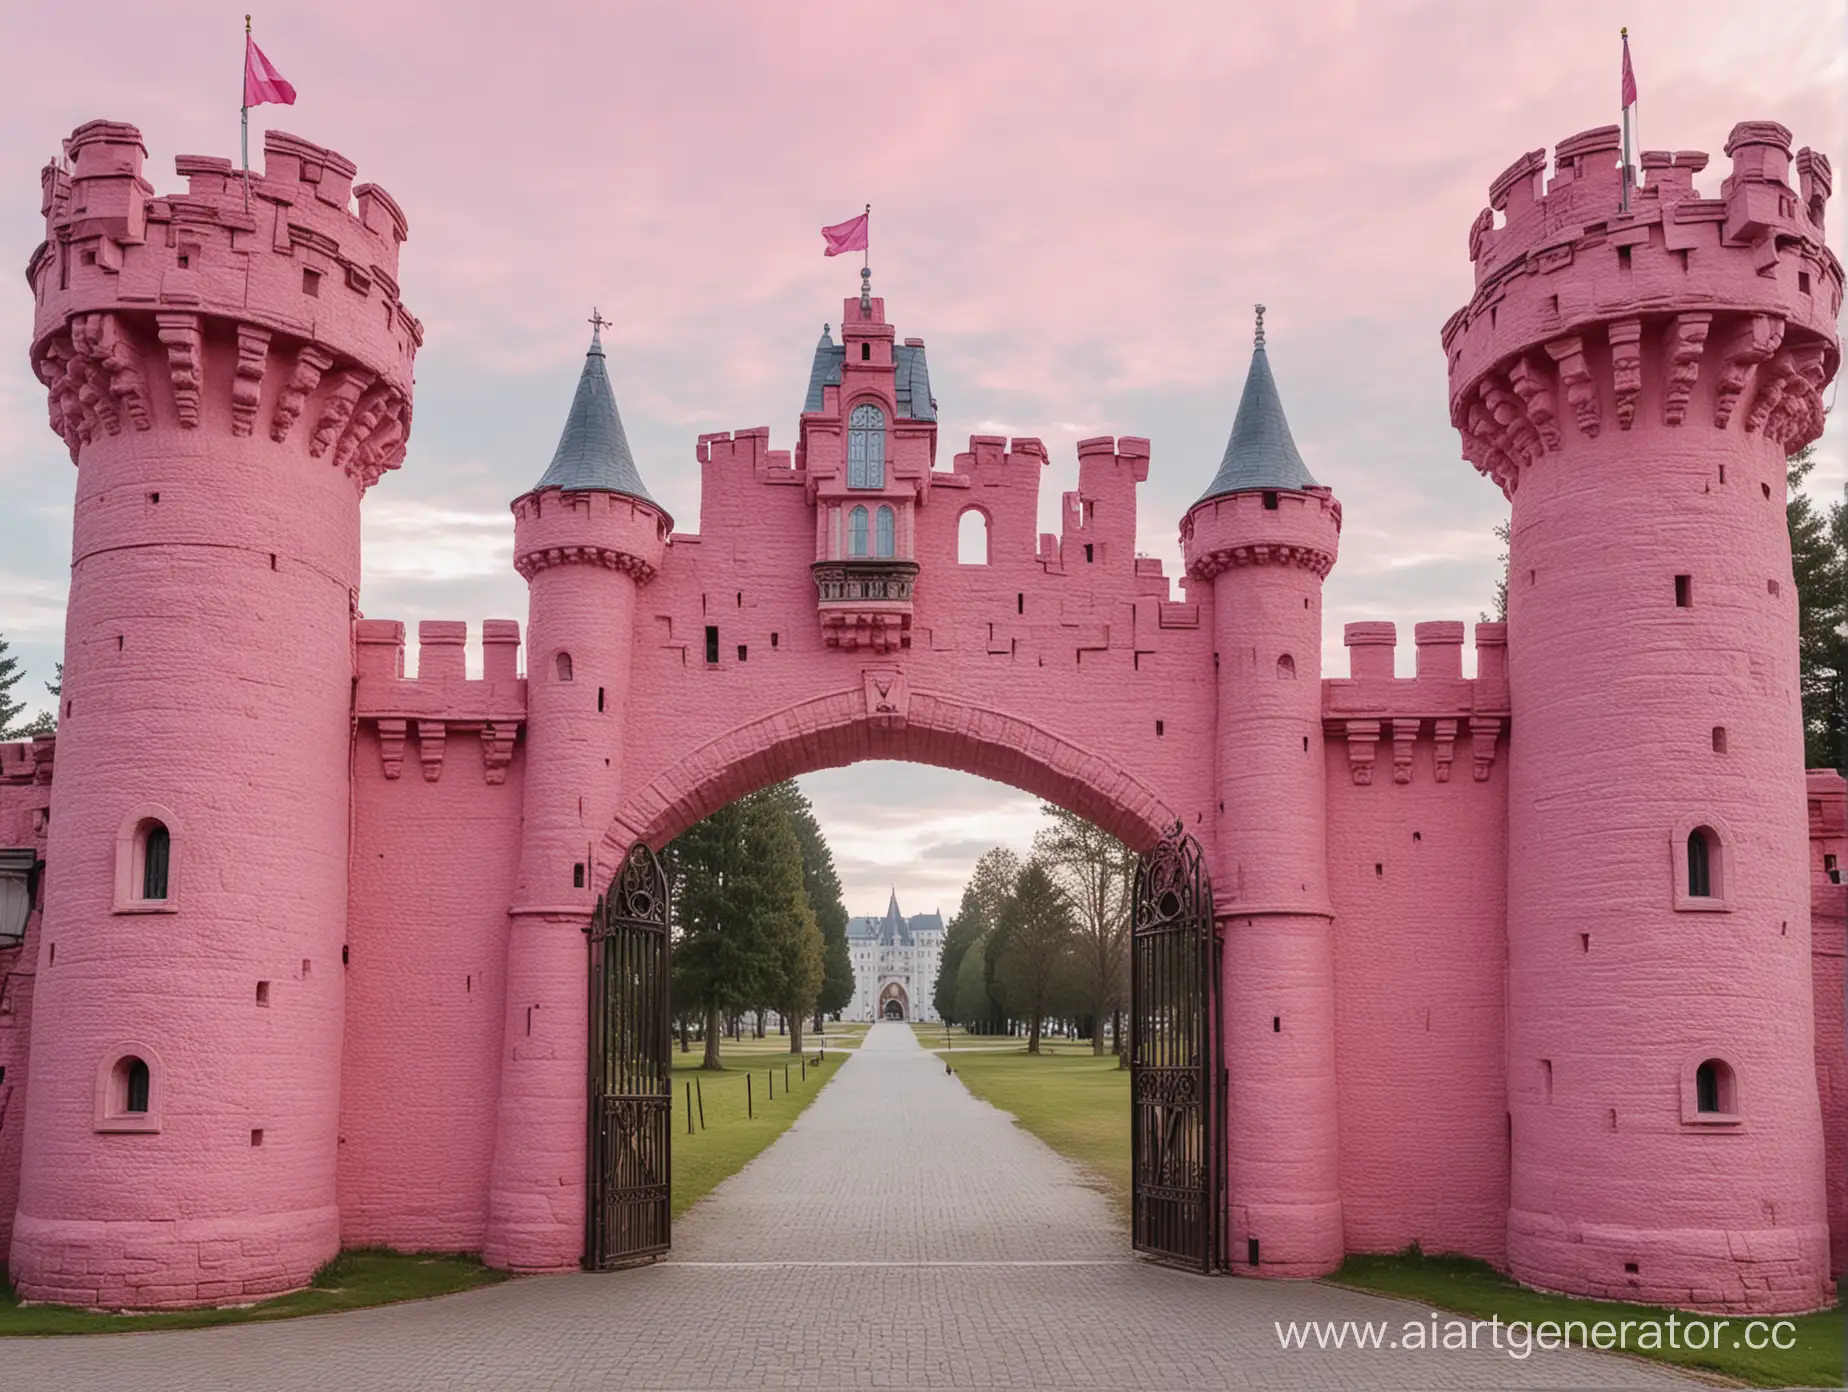 розовый замок  и вход в врата